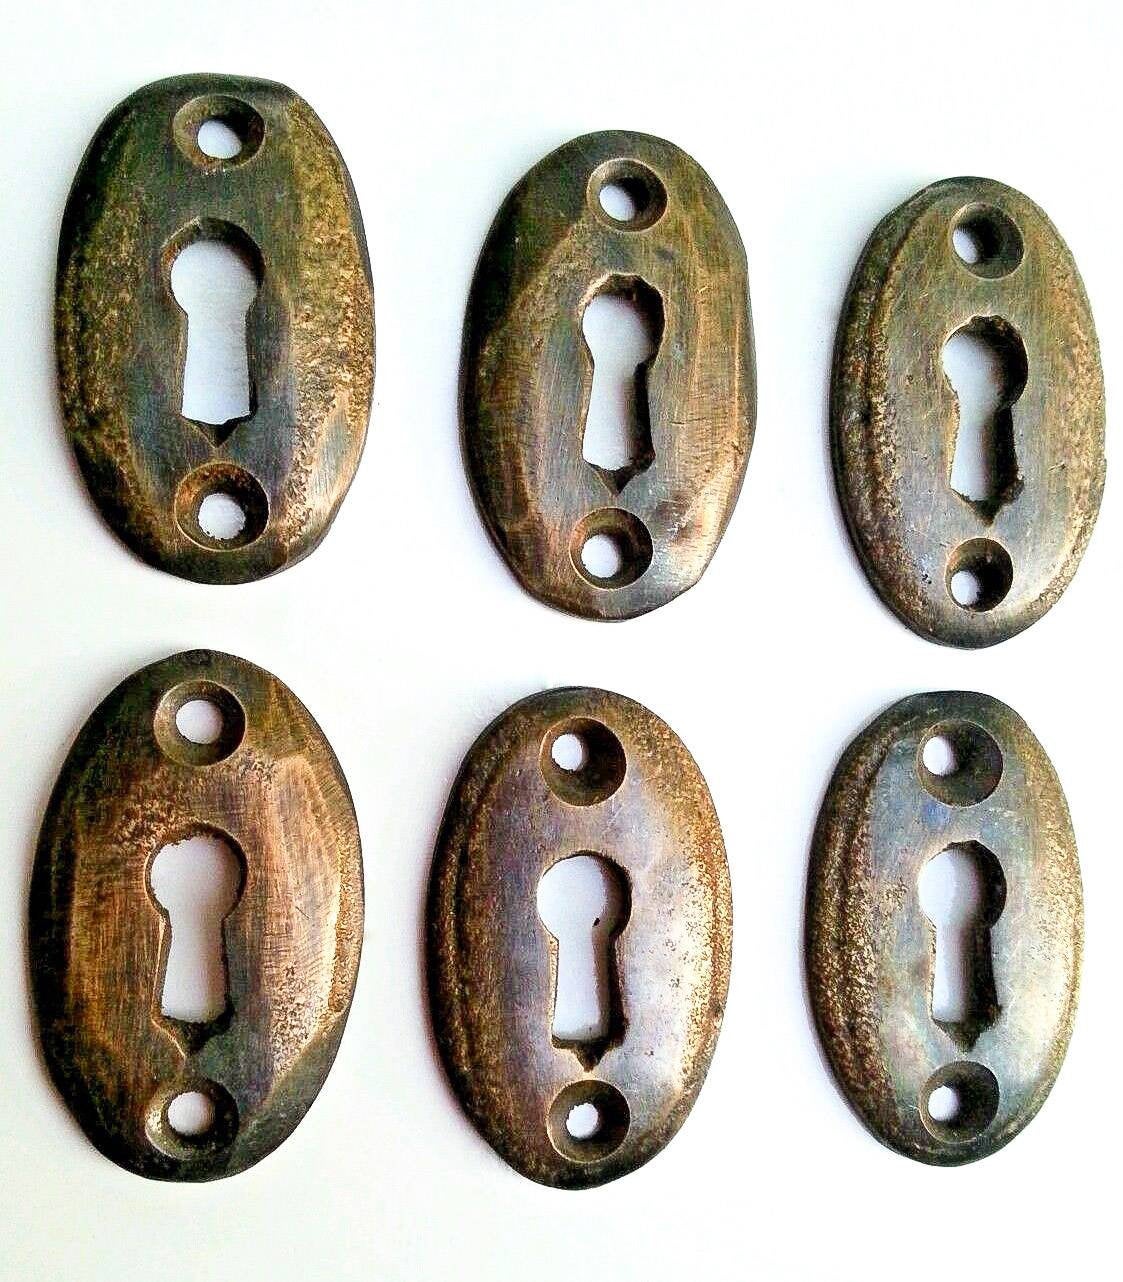 6 oval brass escutcheons size 1-3/8" tall jewelry component #E5